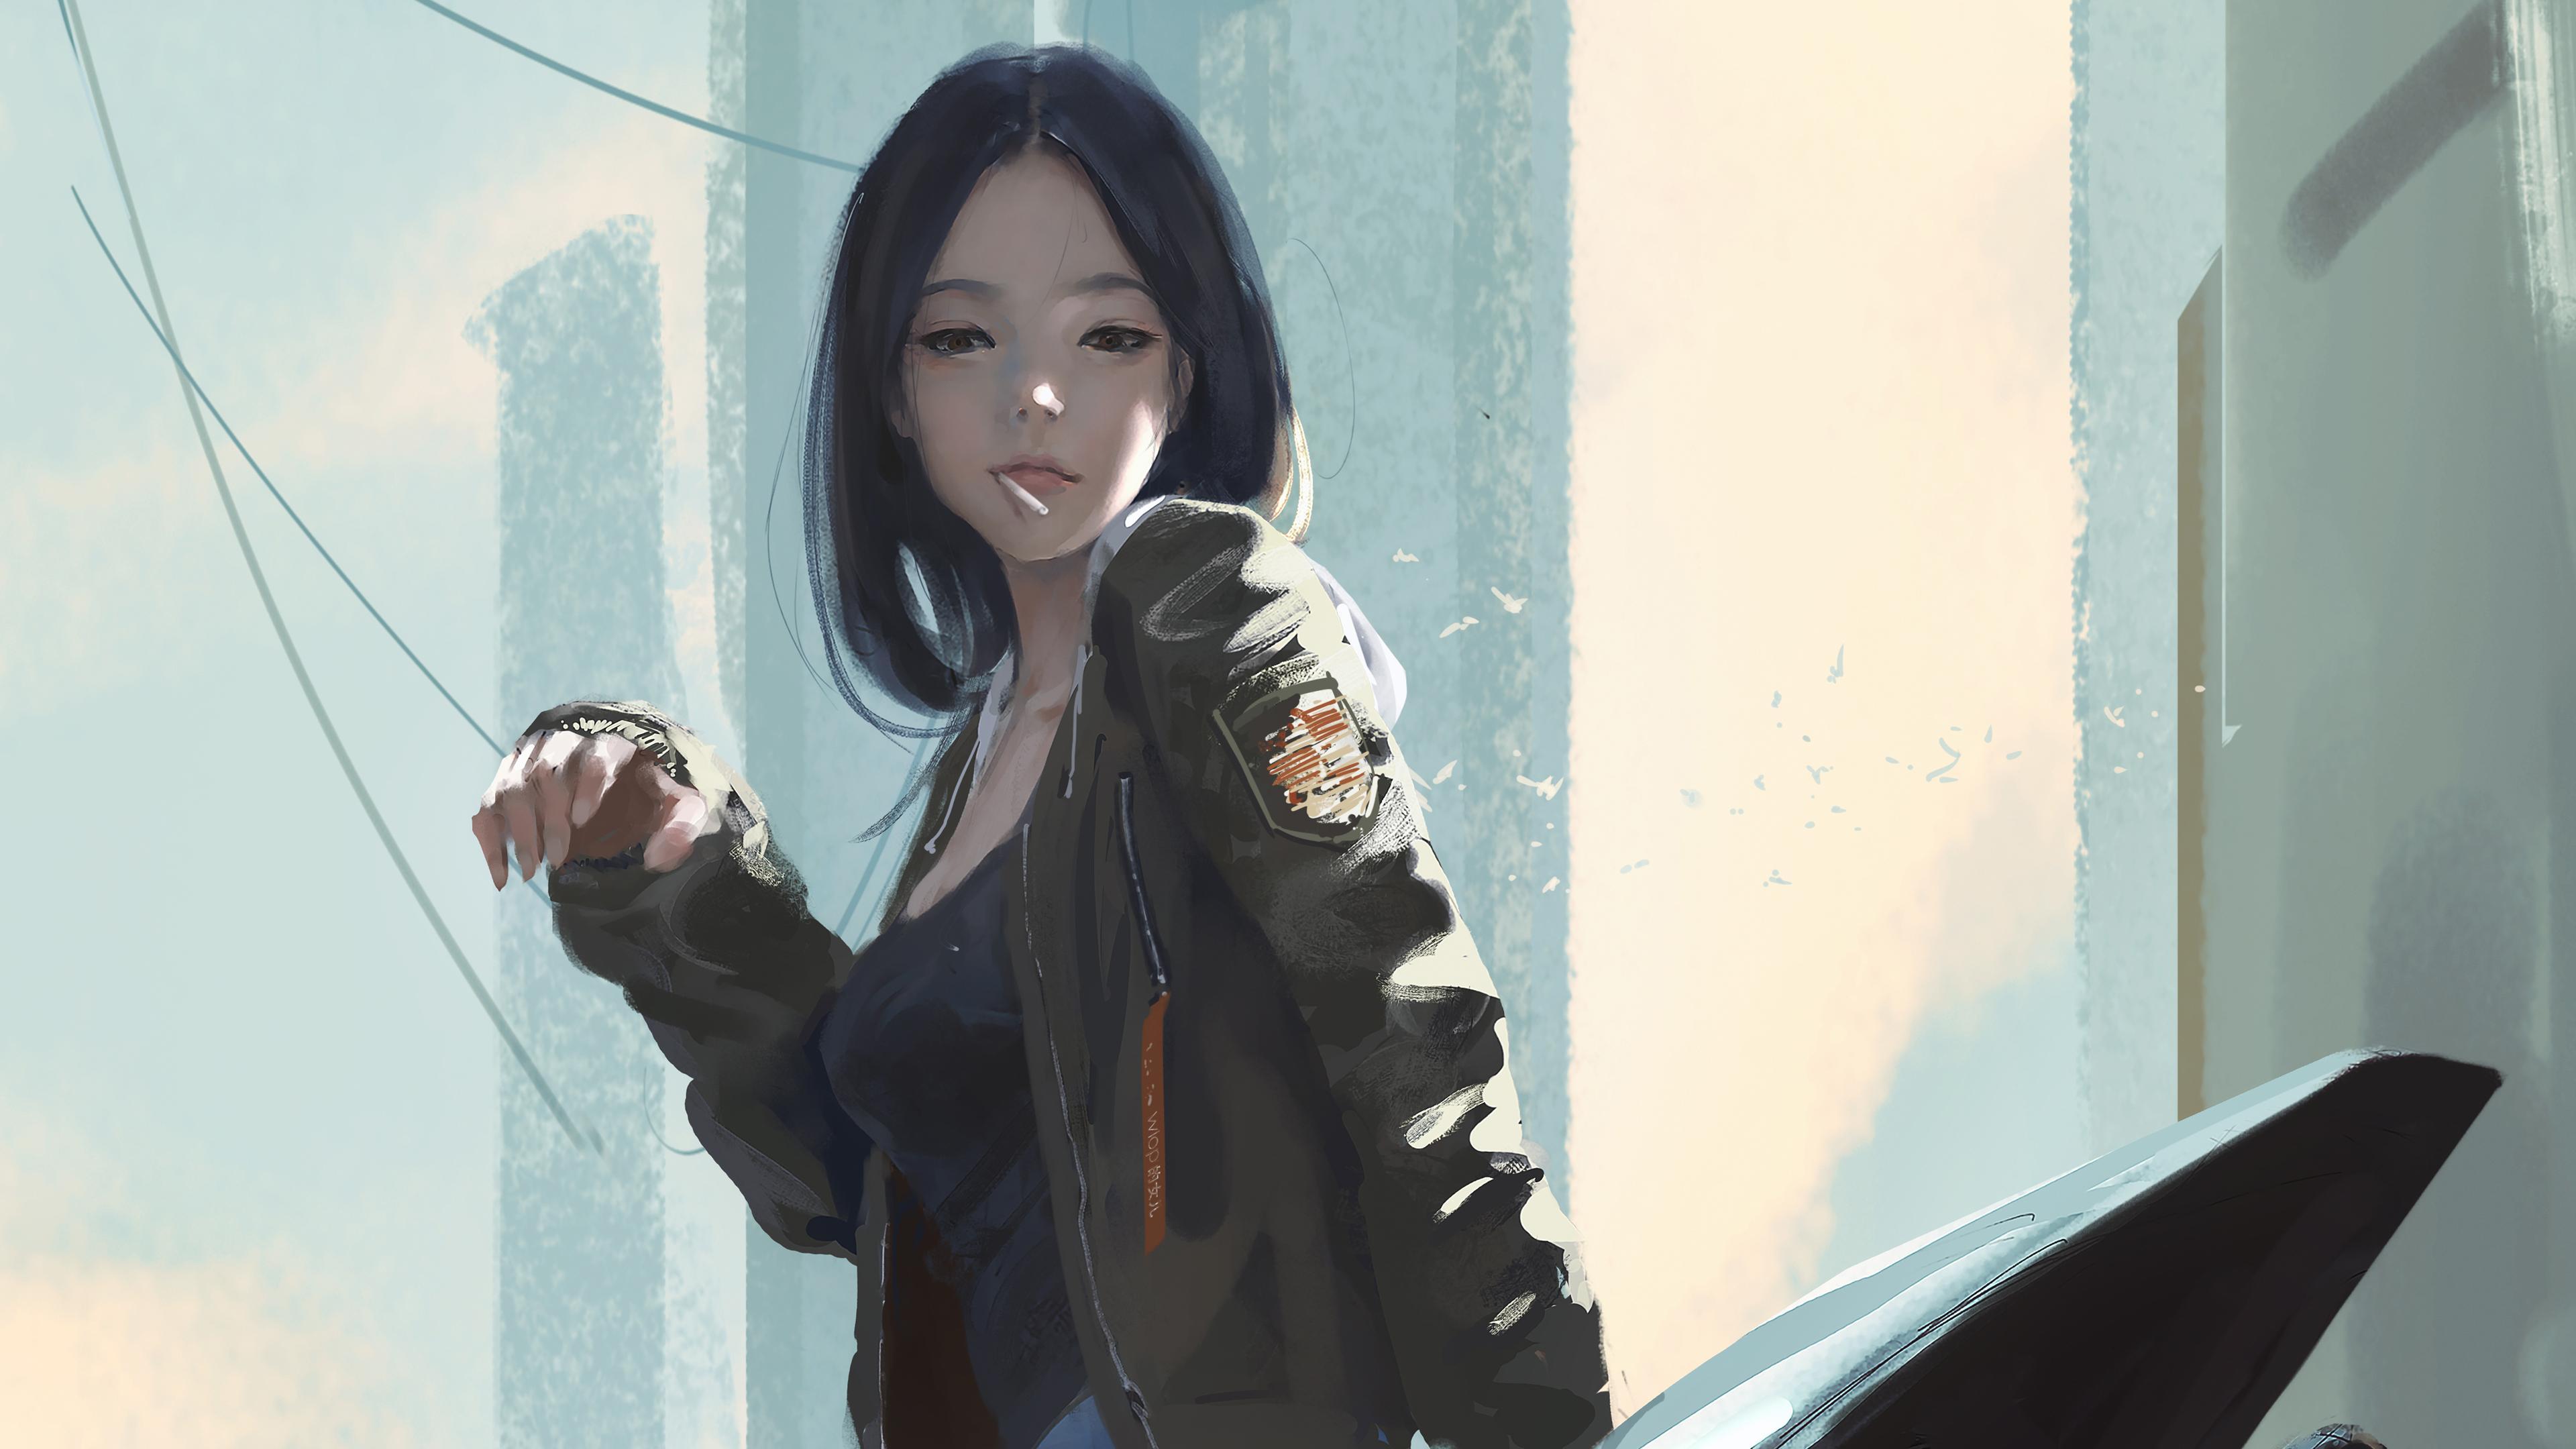 Urban Girl Smoking Cigarette, HD Anime, 4k Wallpapers, Image